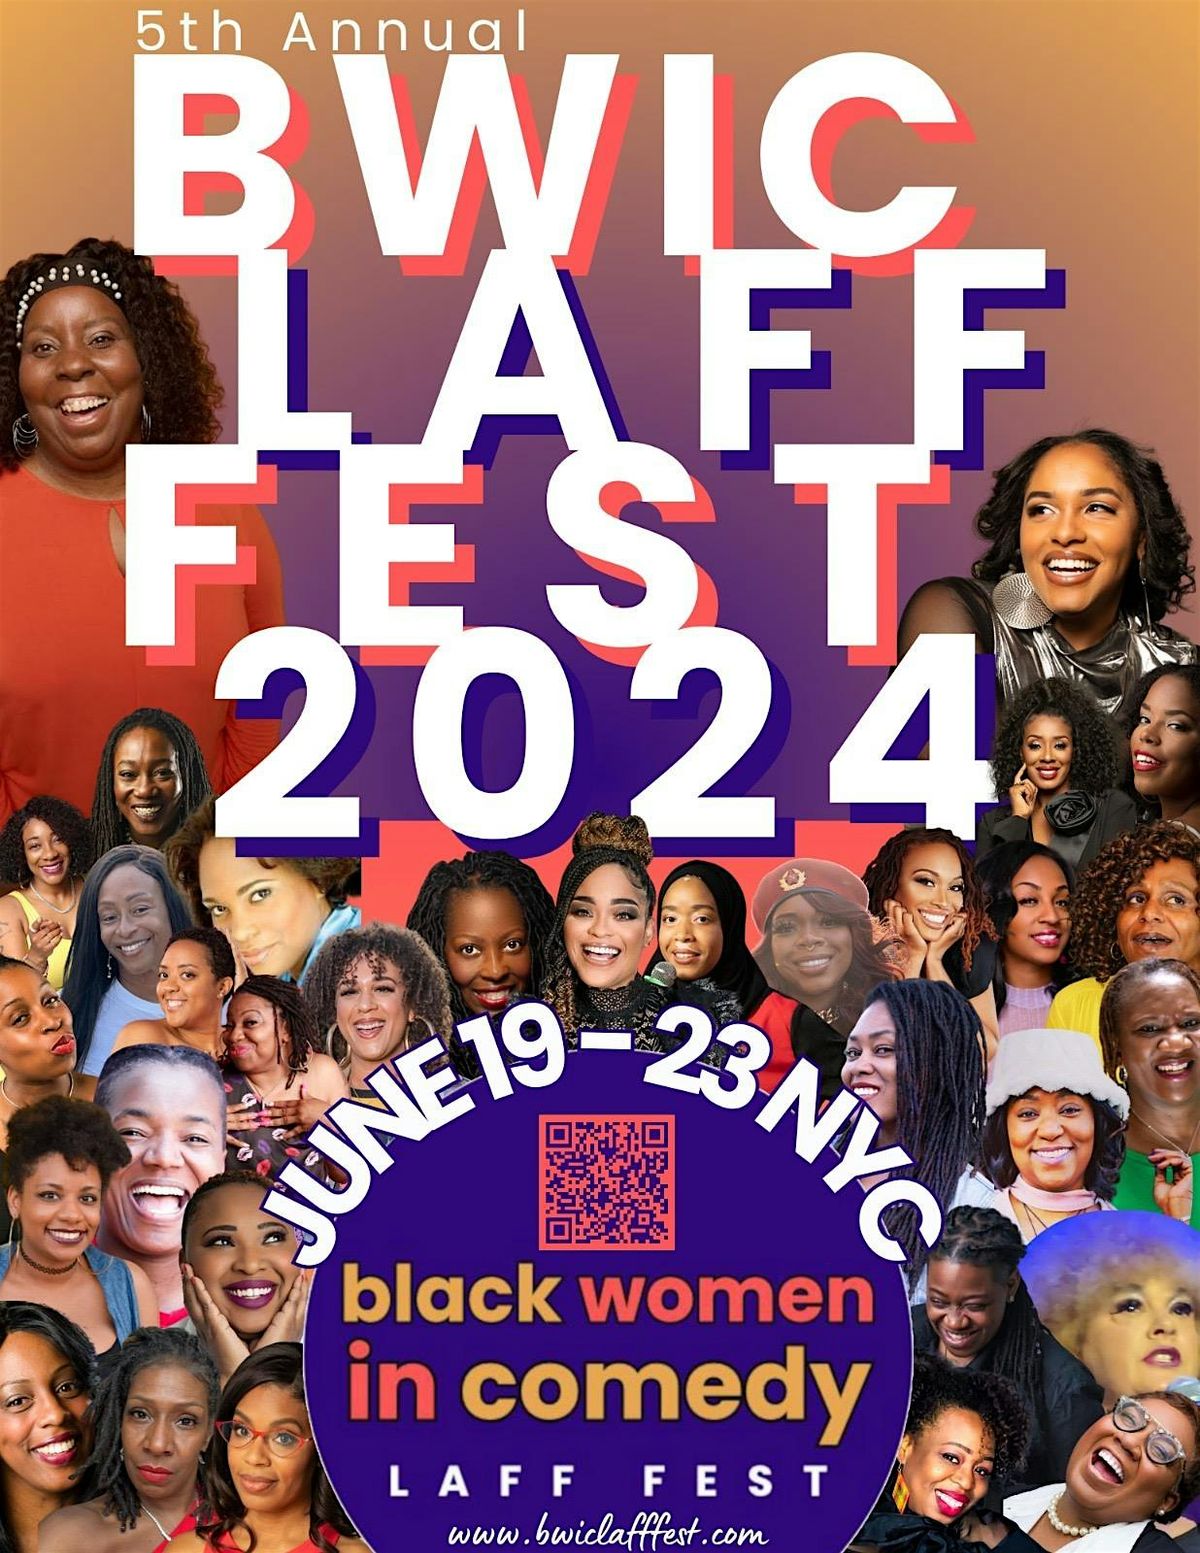 The 5th Annual Black Women in Comedy Laff Fest presents\u2026Naturally Funny!